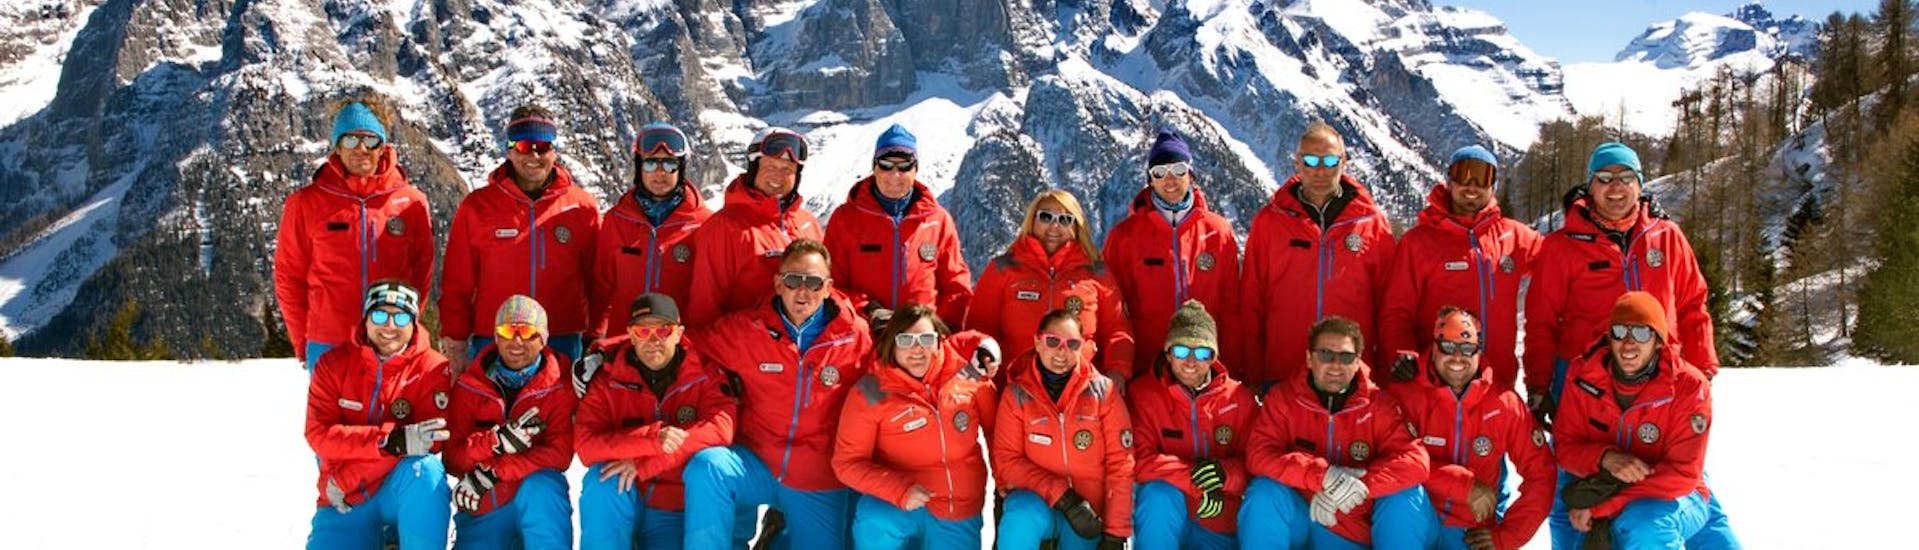 The ski and snowboard instructors from Scuola di Sci Val di Sole are posing in front of the camera.